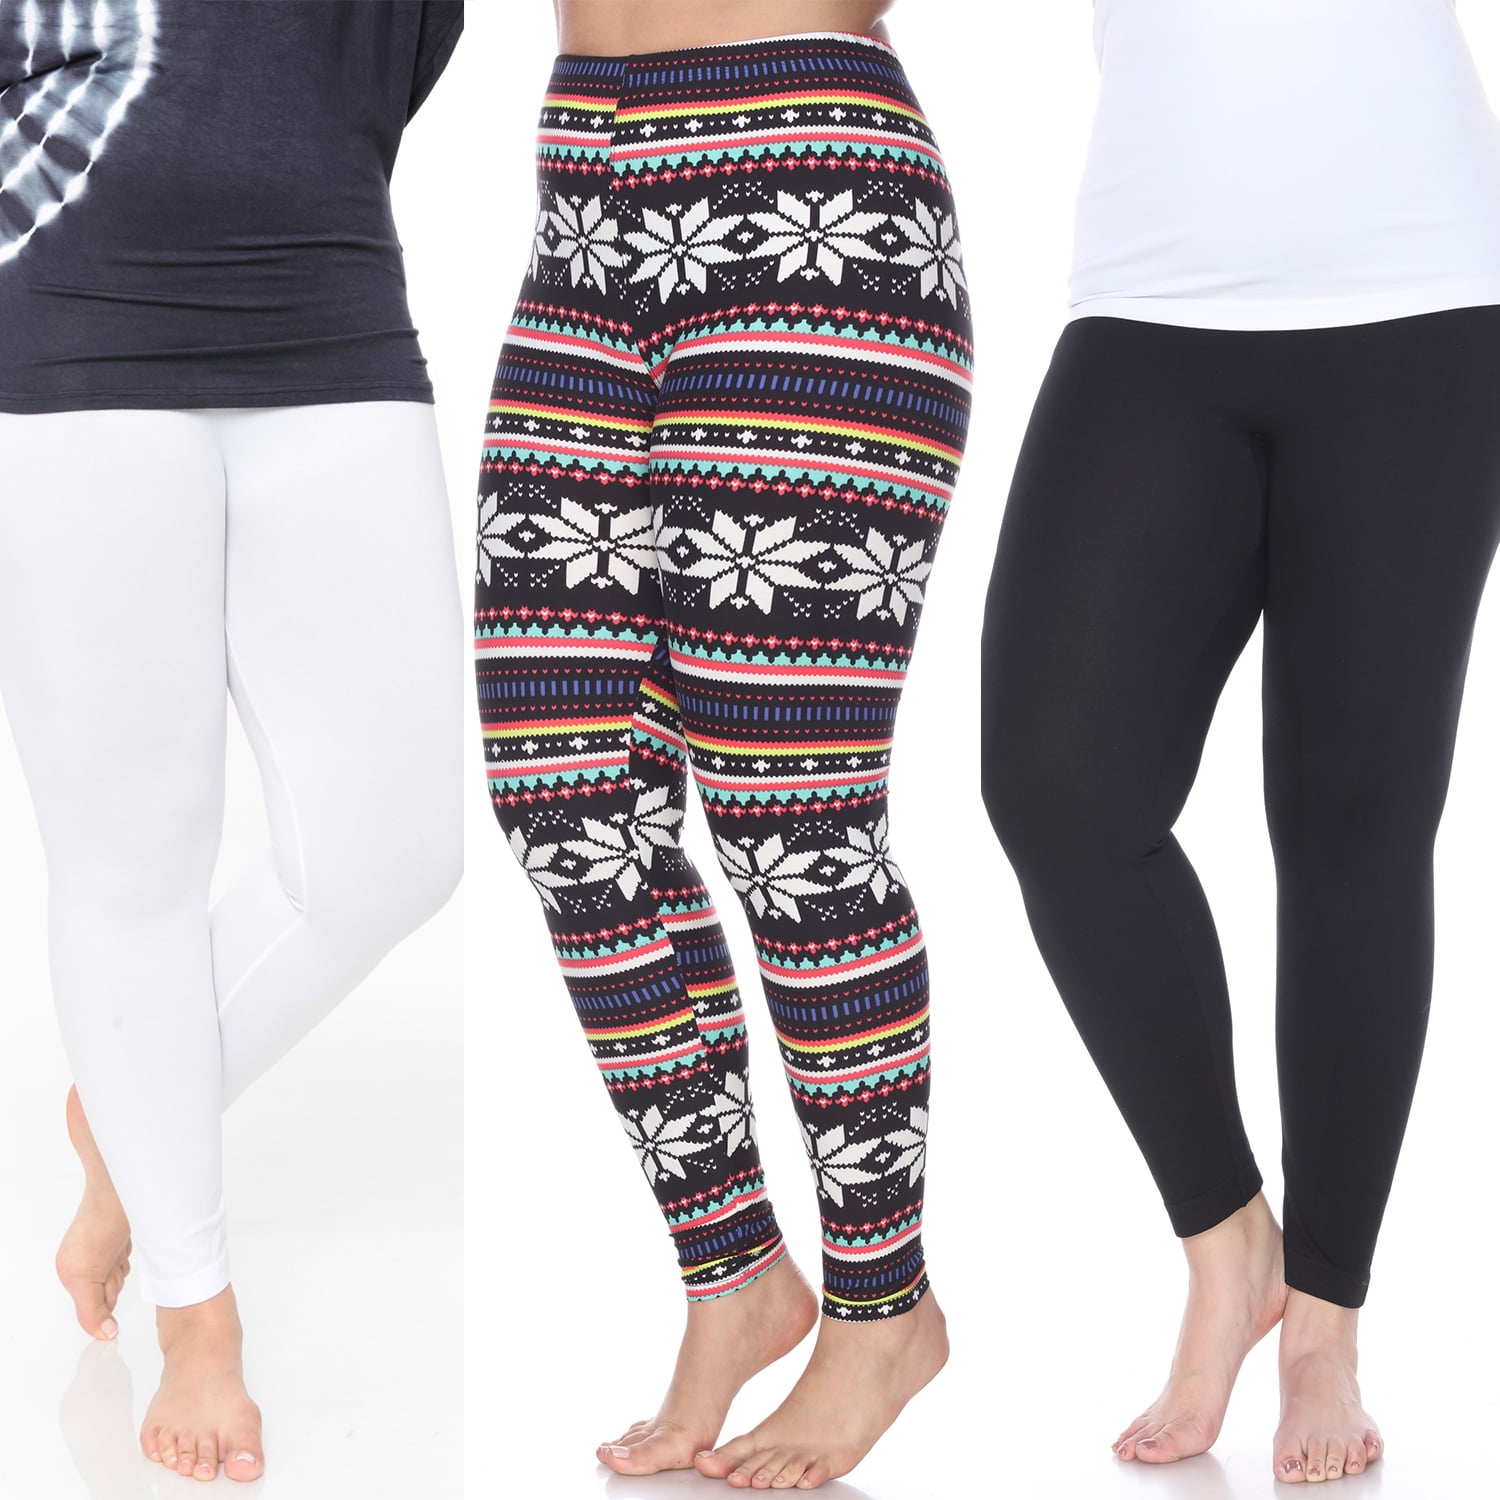 White Mark Women's Pack of 3 Plus Size Casual Leggings